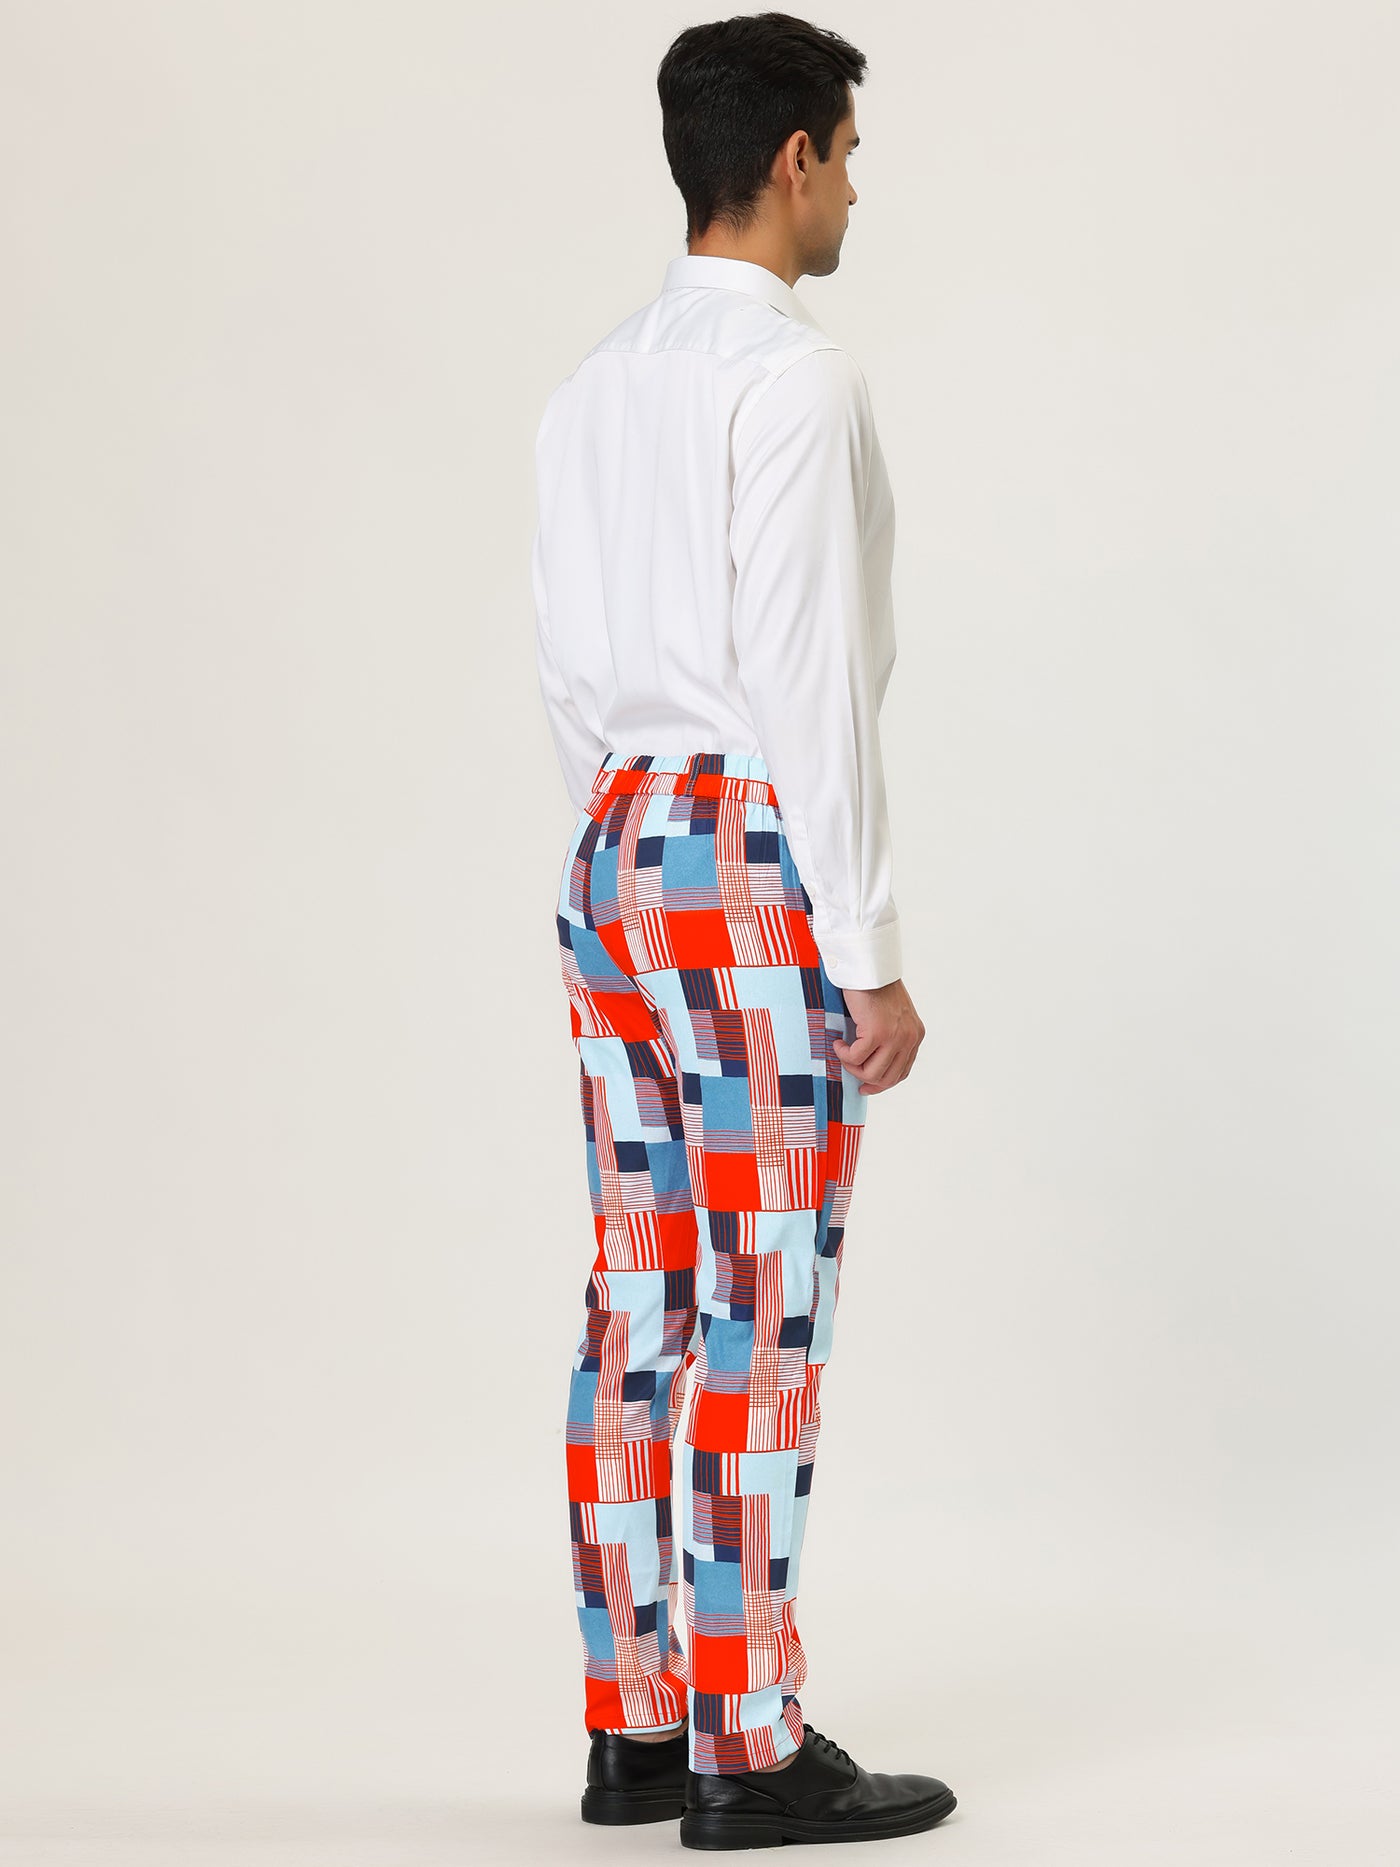 Bublédon Casual Geometric Printed Color Block Dress Pants